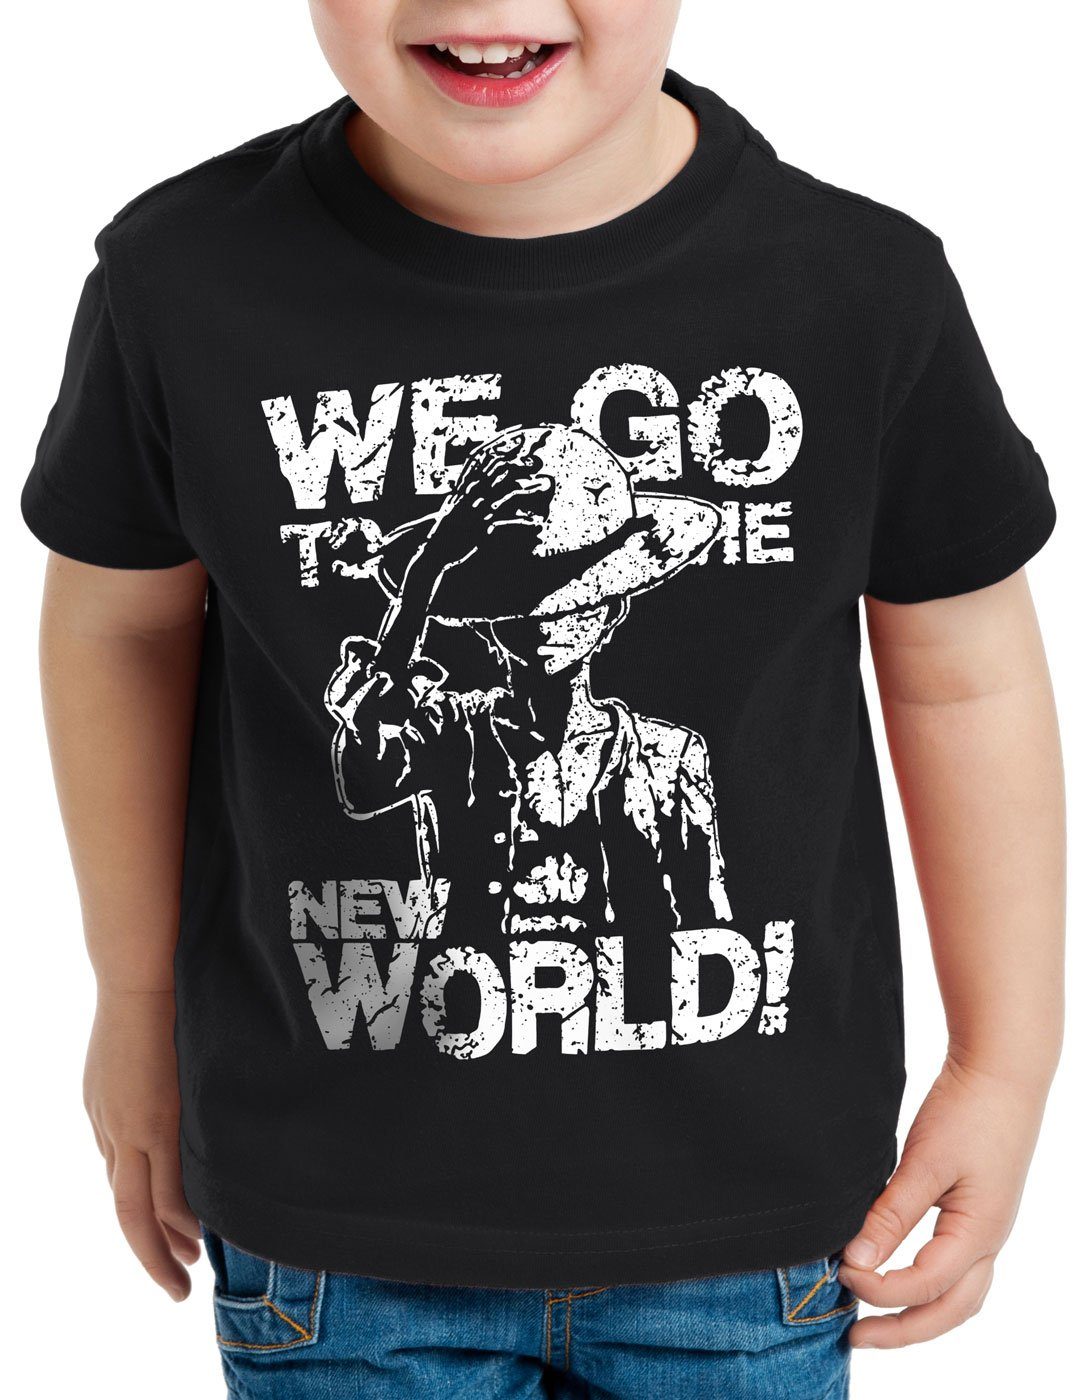 T-Shirt Strohhut World Kinder Print-Shirt schwarz style3 New Anime Ruffy Pirate